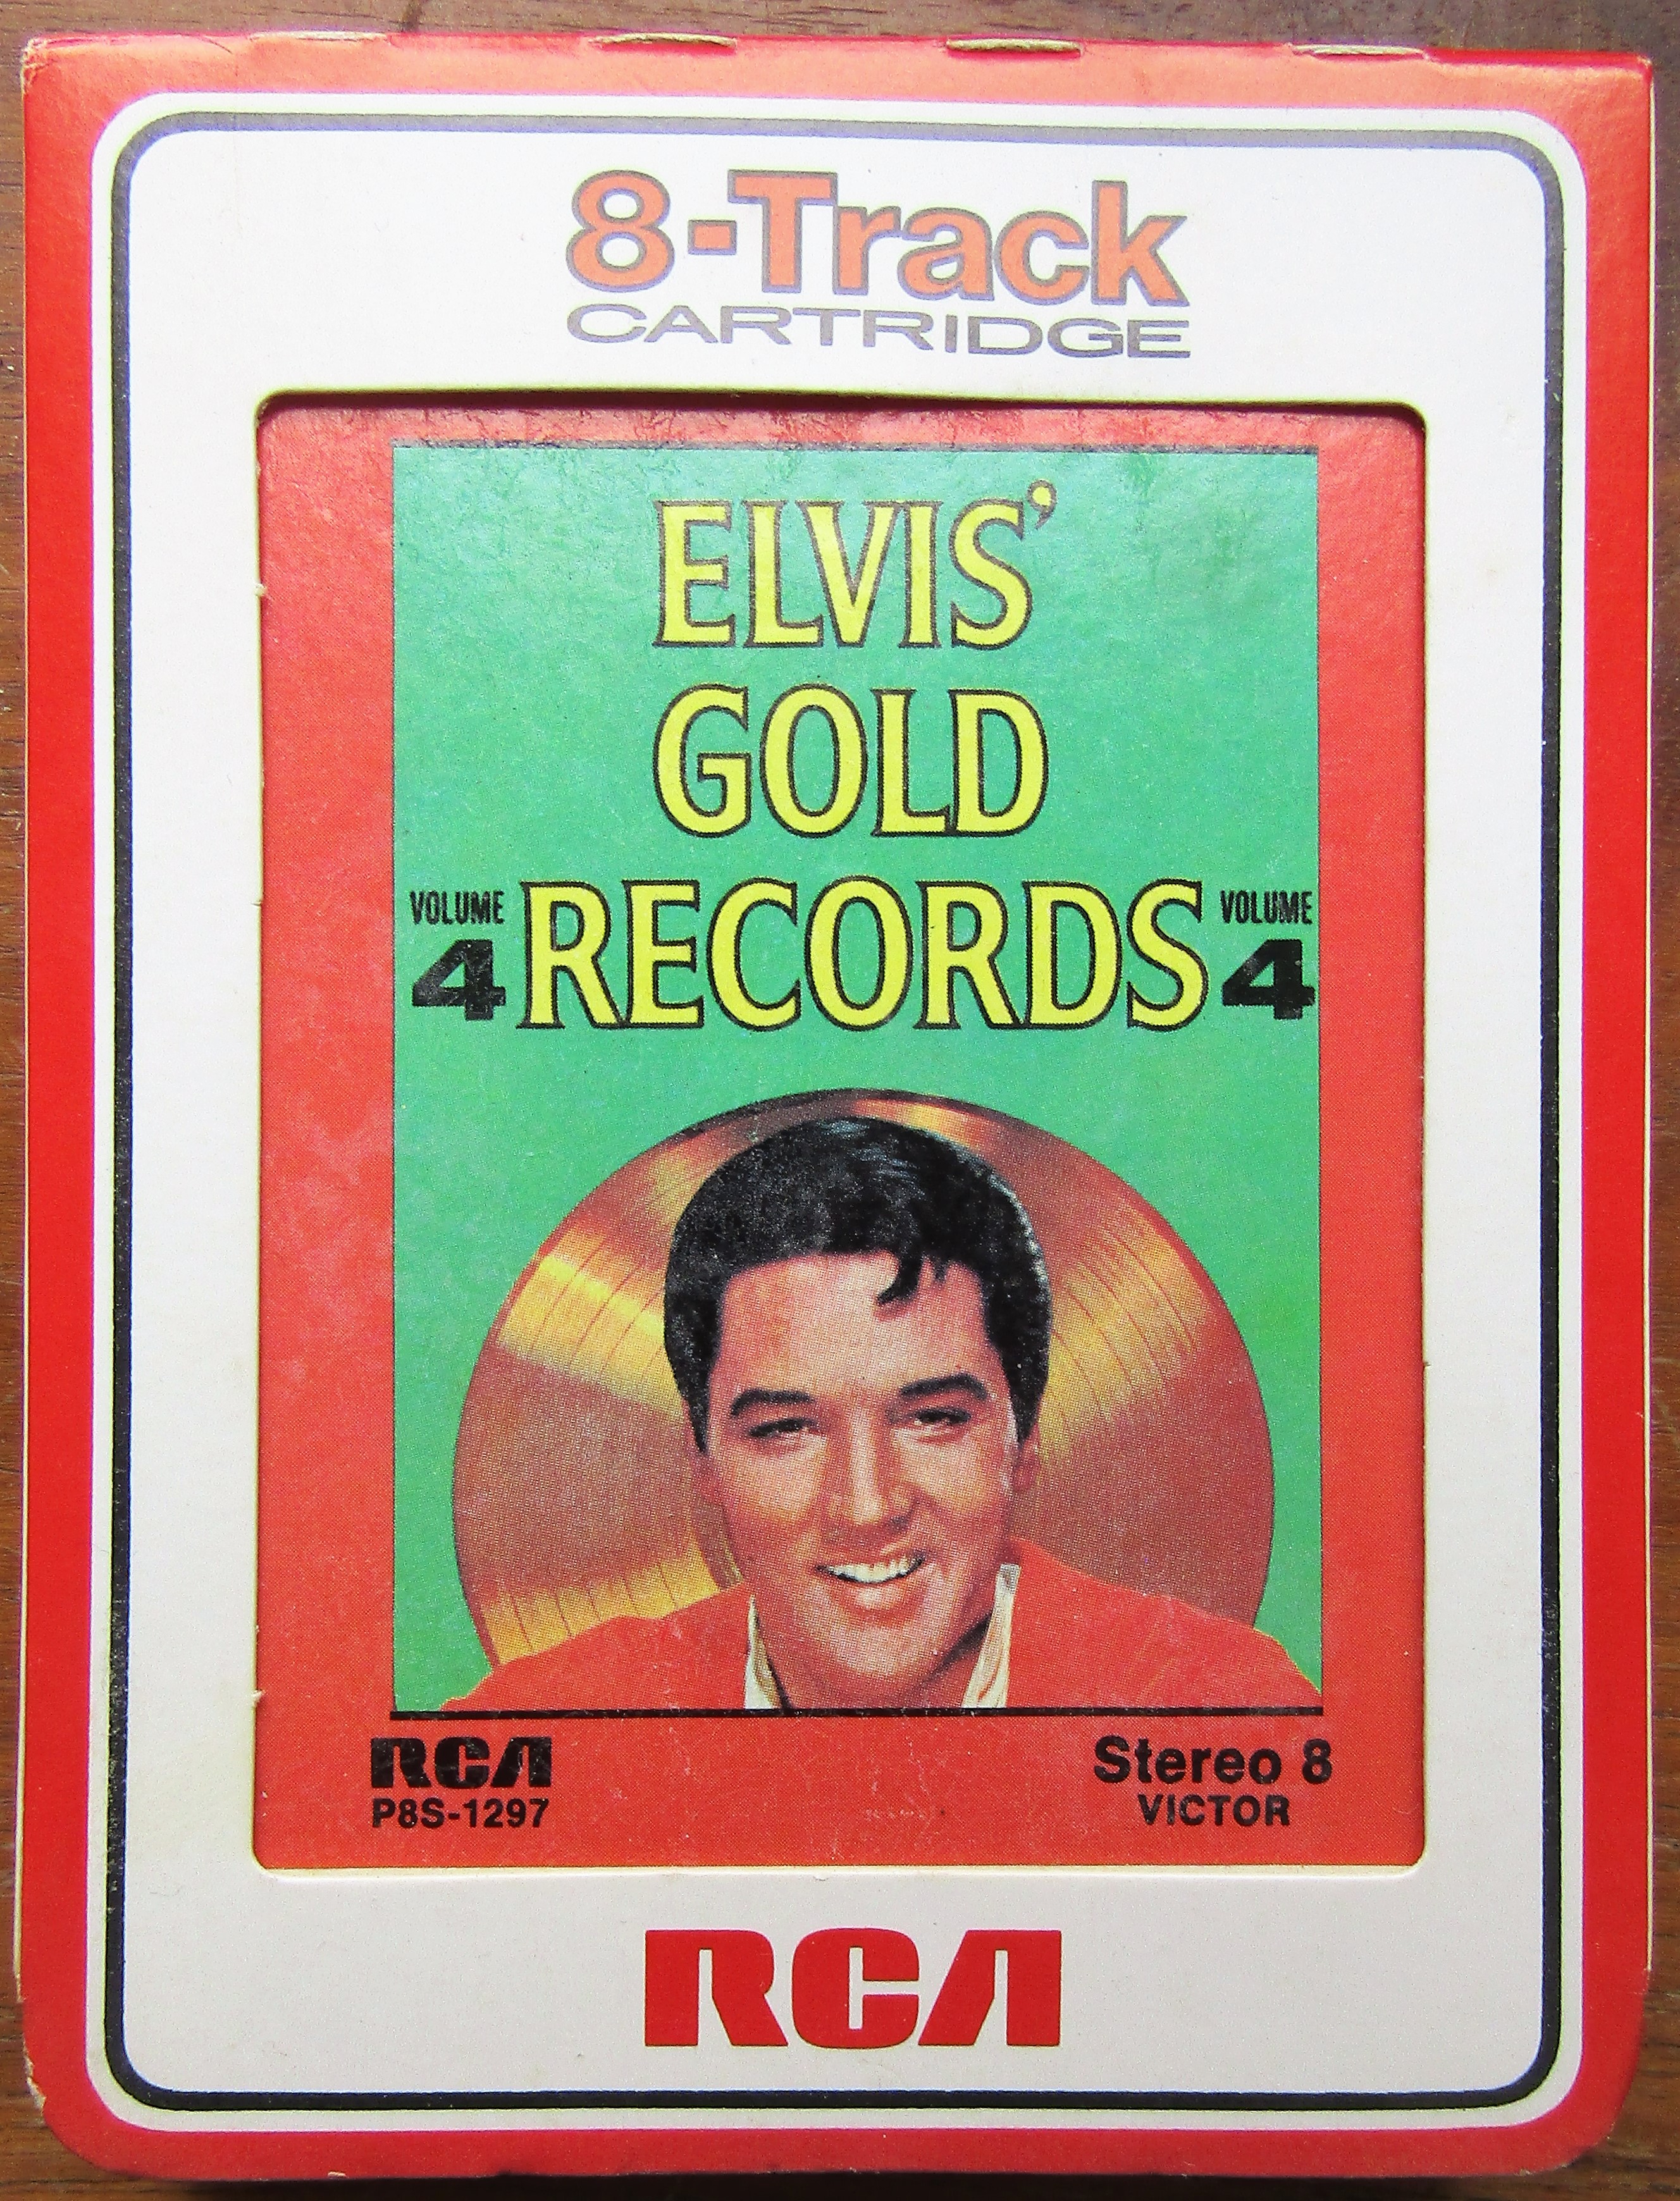 Elvis' Gold Records, Volume 4